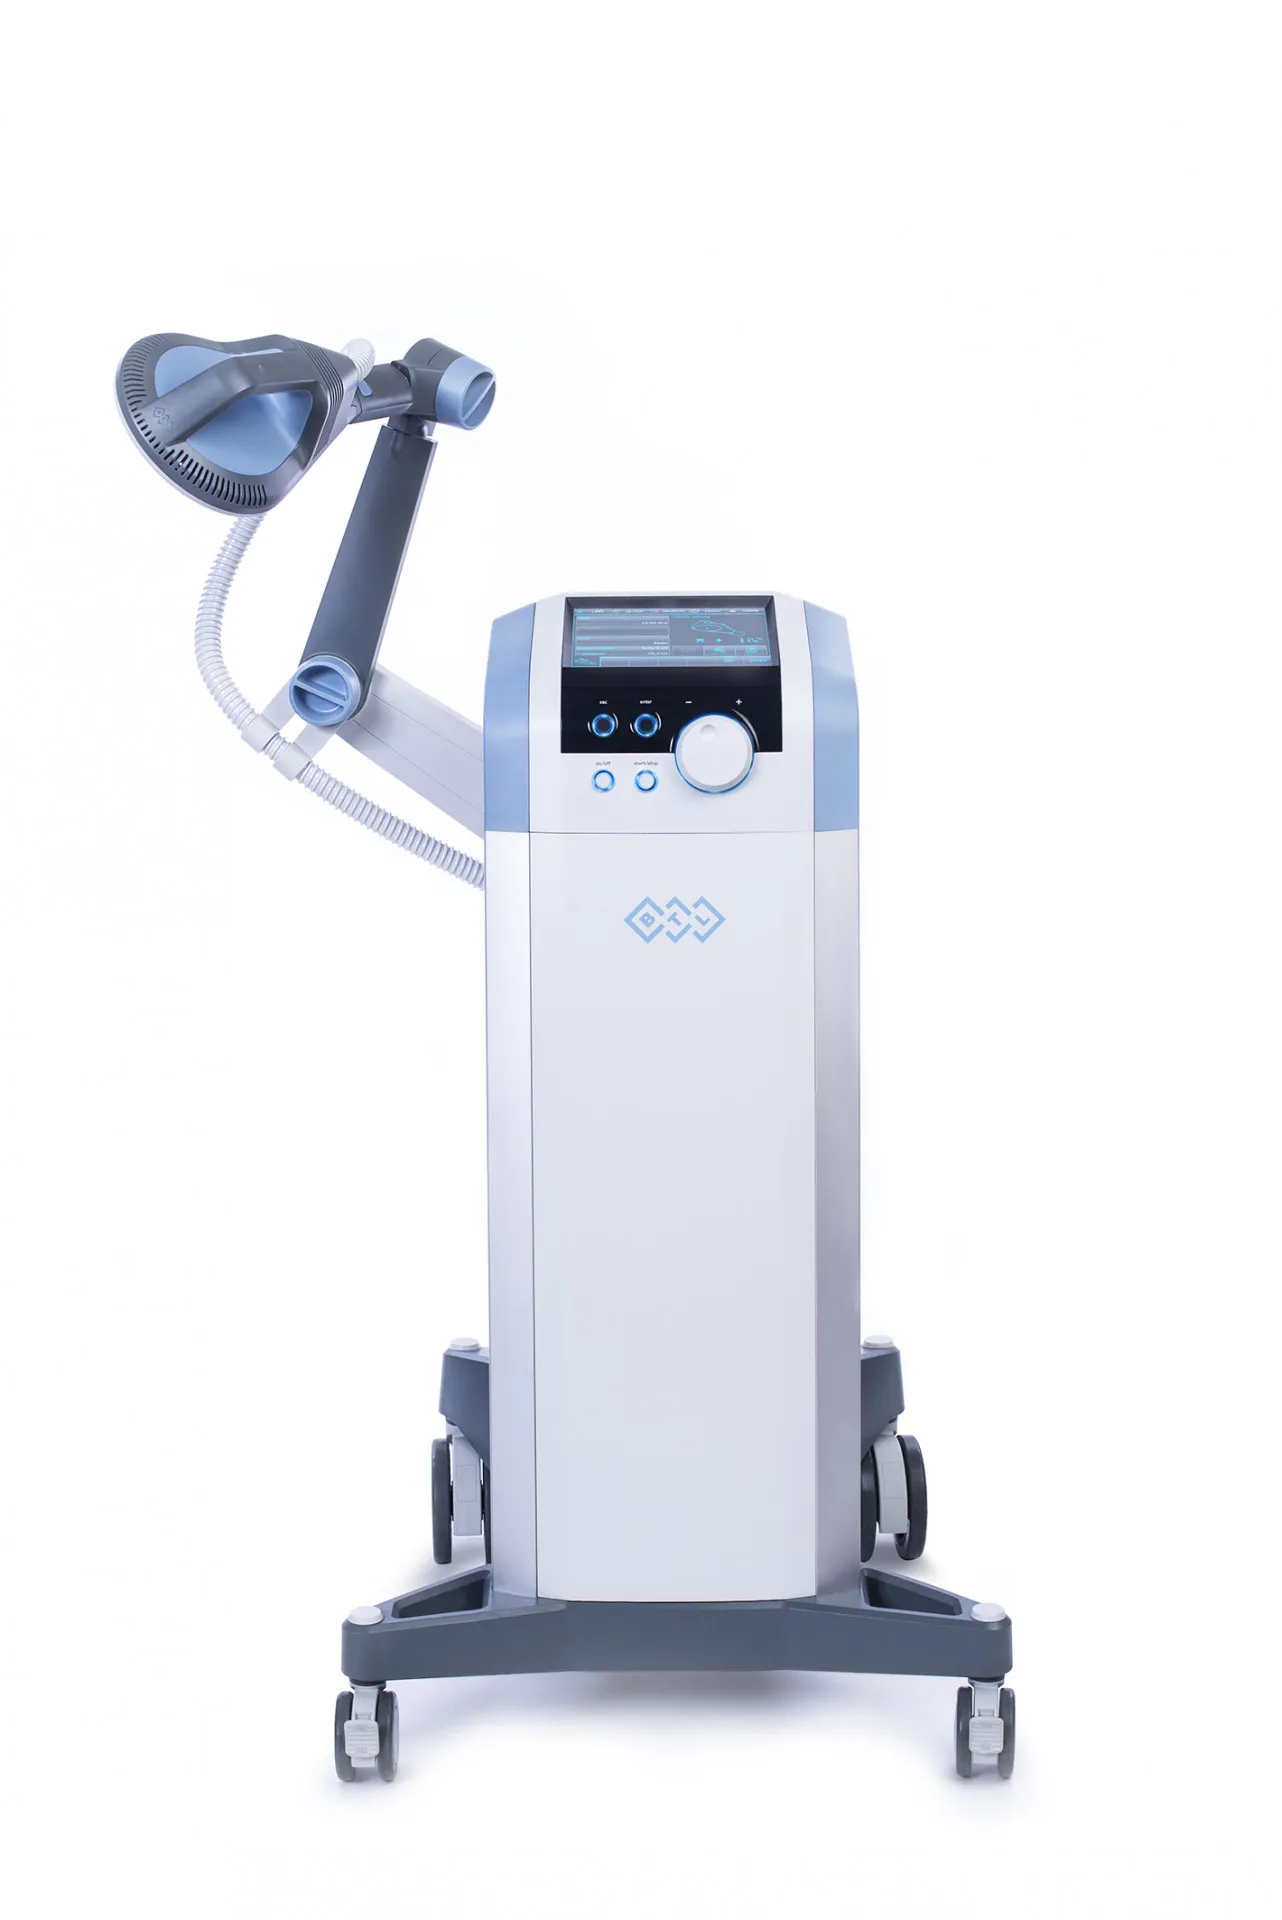 BTL-6000 Super Inductive System yuqori intensiv magnit terapiya apparati#1